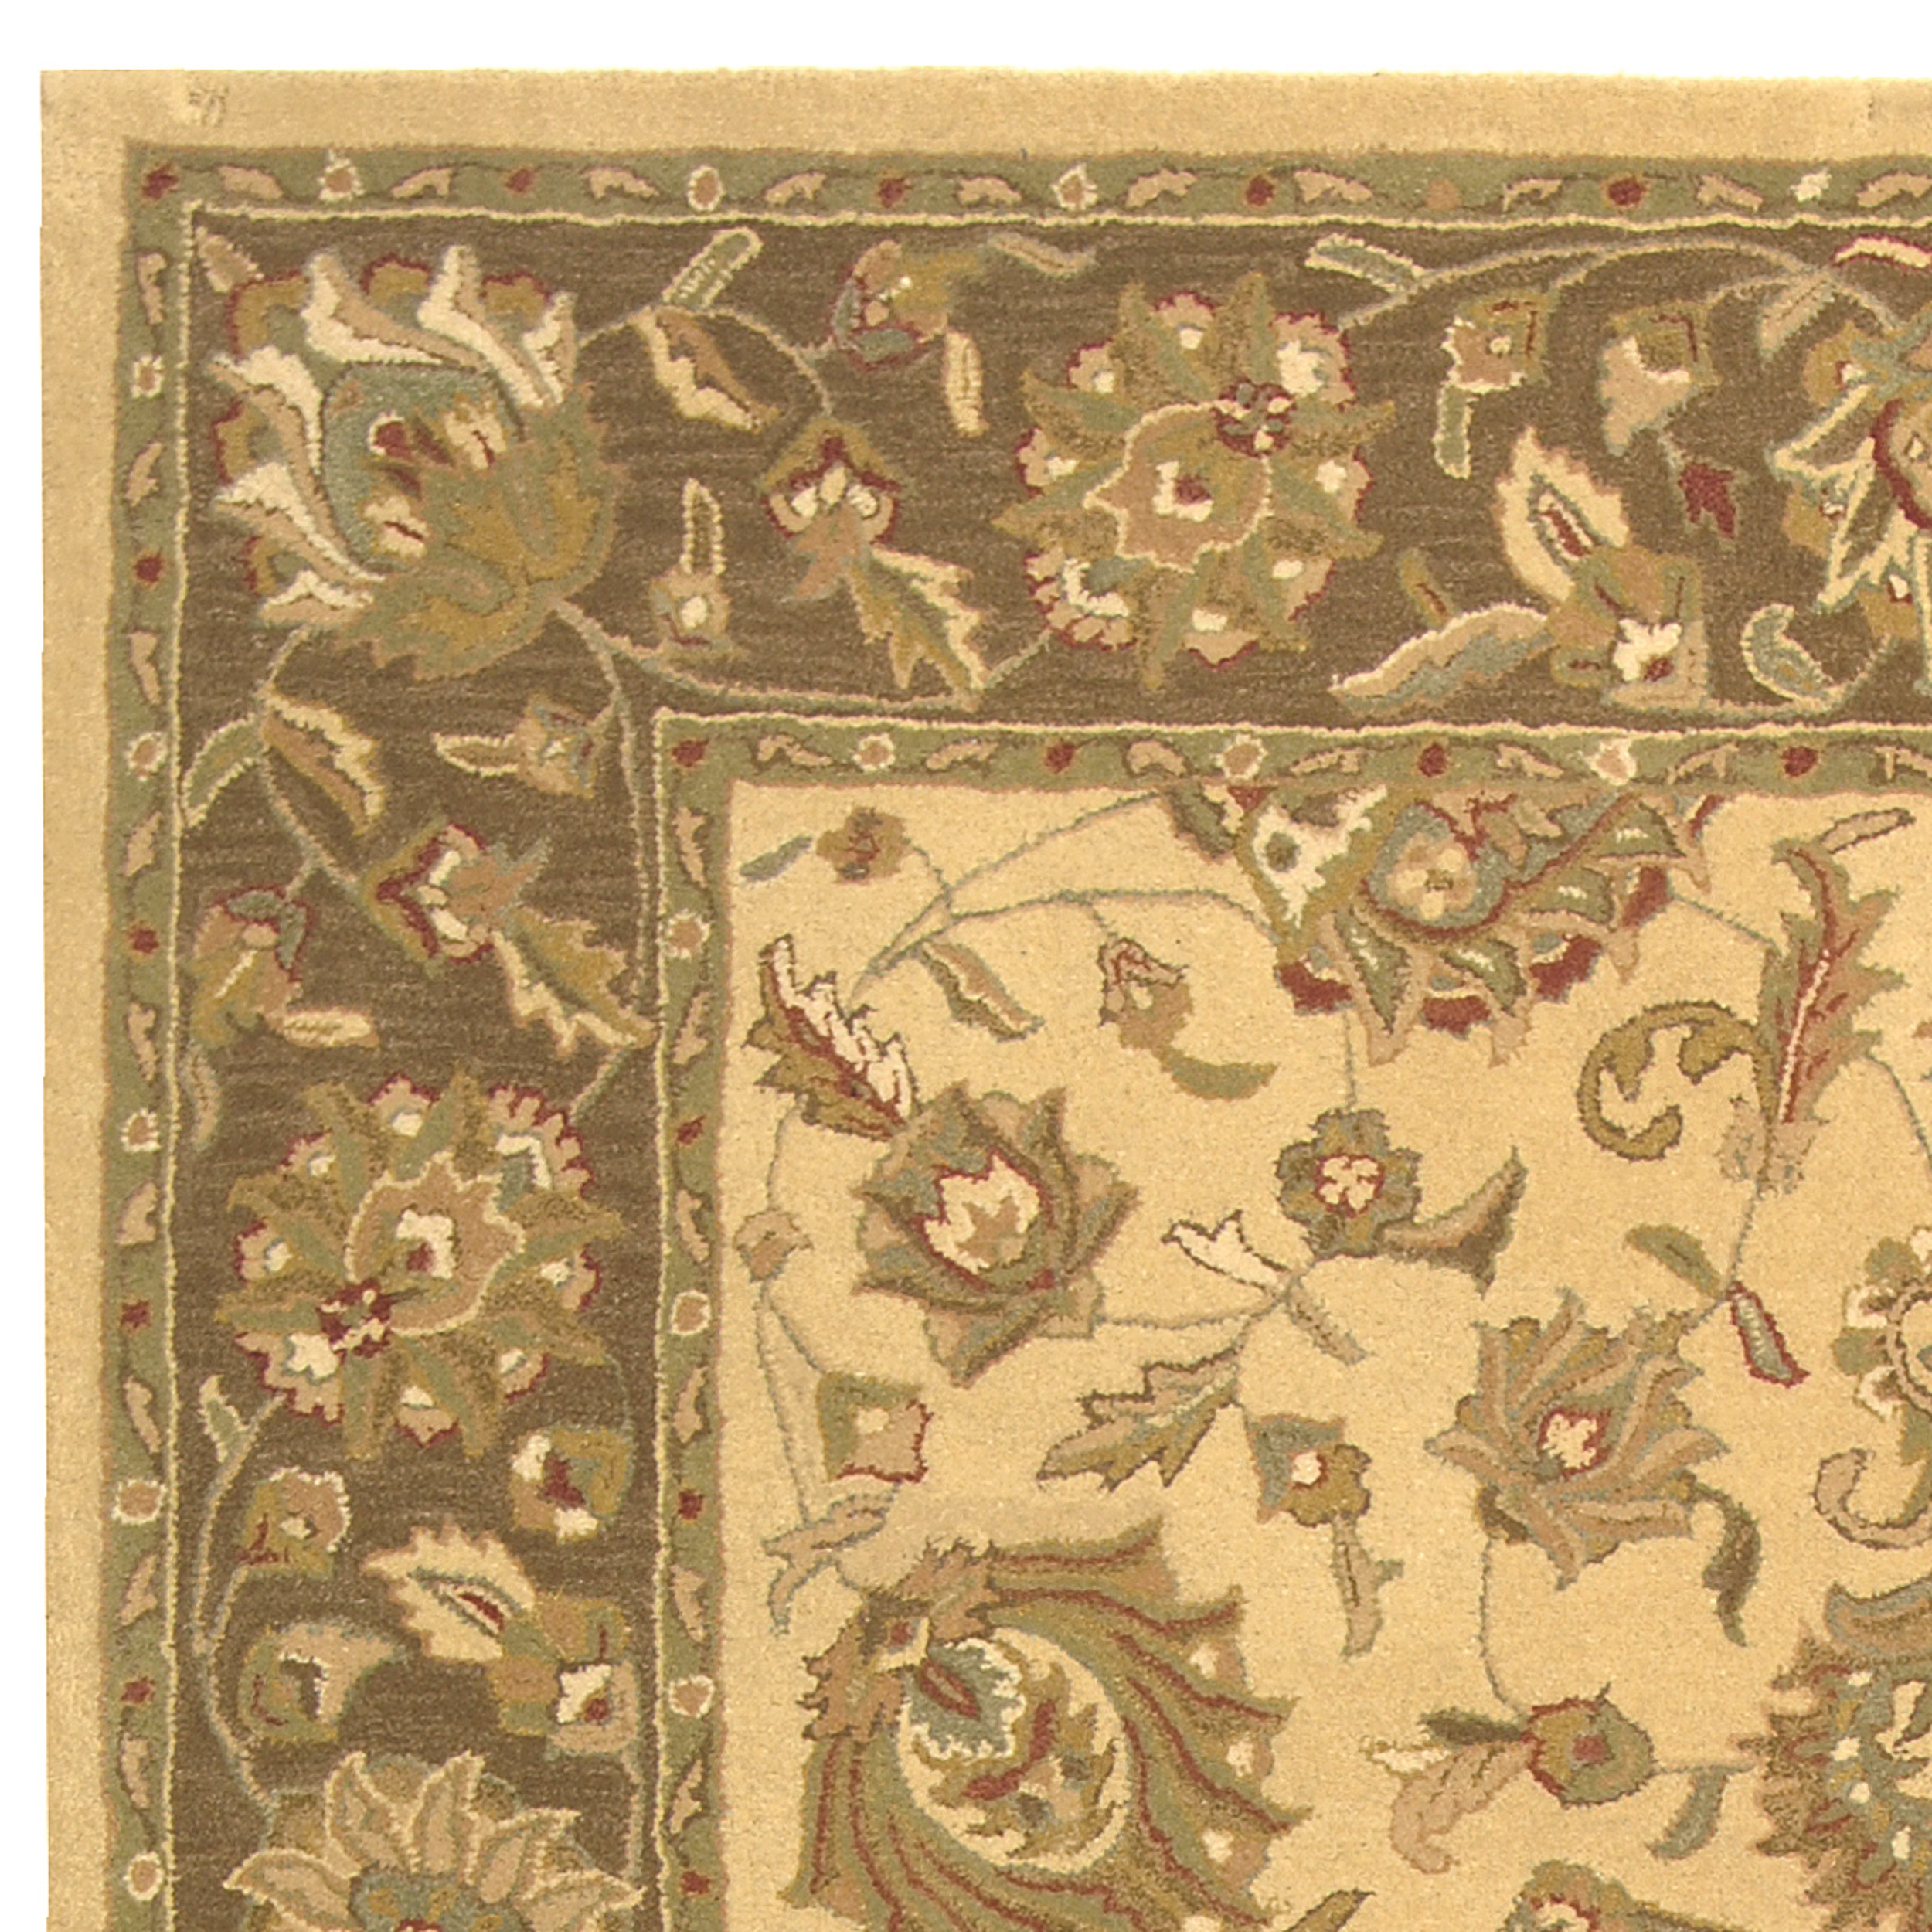 SAFAVIEH Heritage Regis Traditional Wool Area Rug, Ivory/Brown, 8'3" x 11' - image 2 of 4